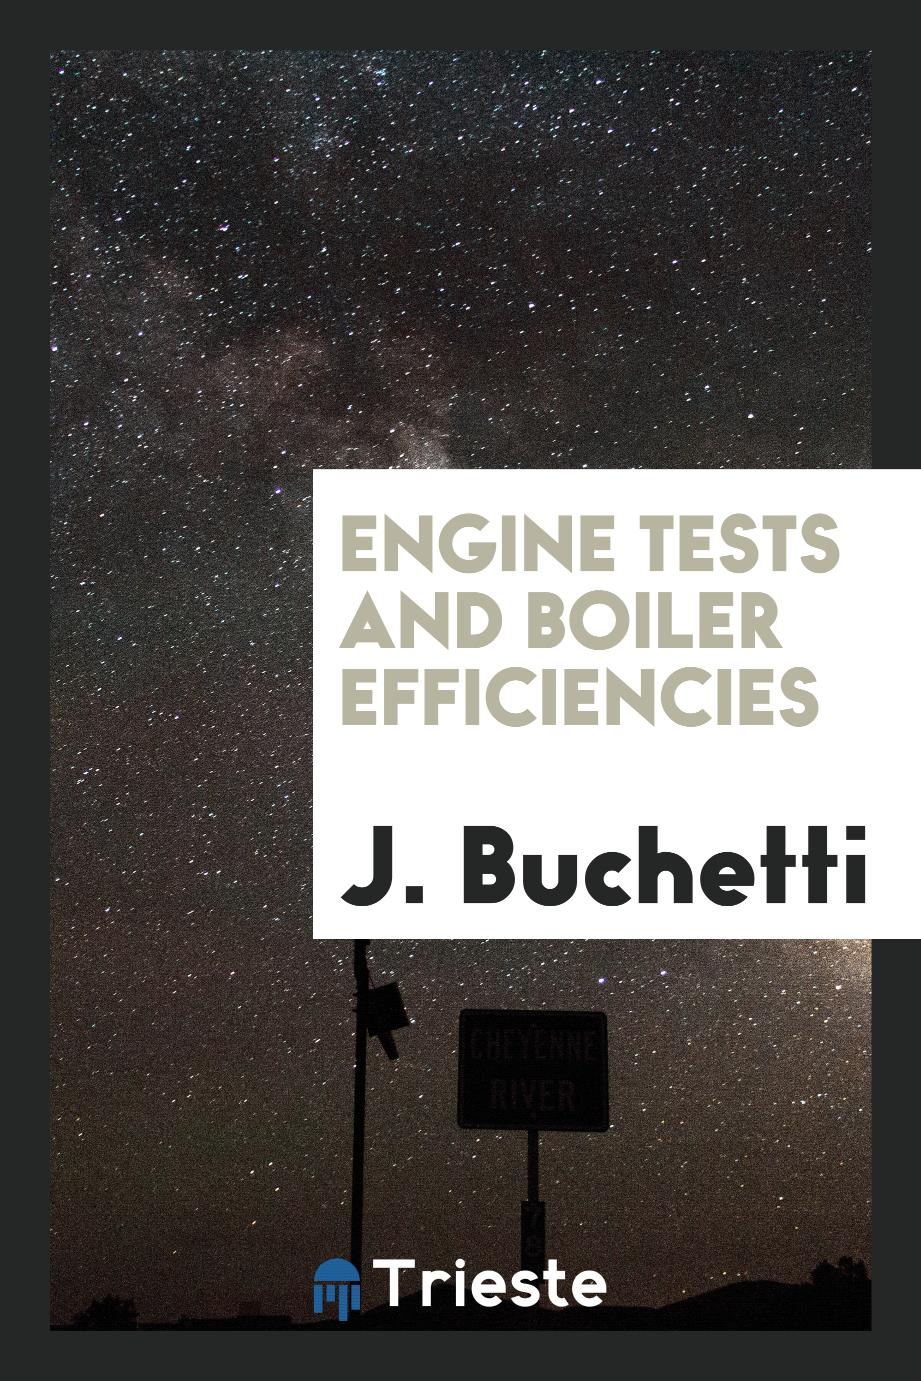 Engine tests and boiler efficiencies